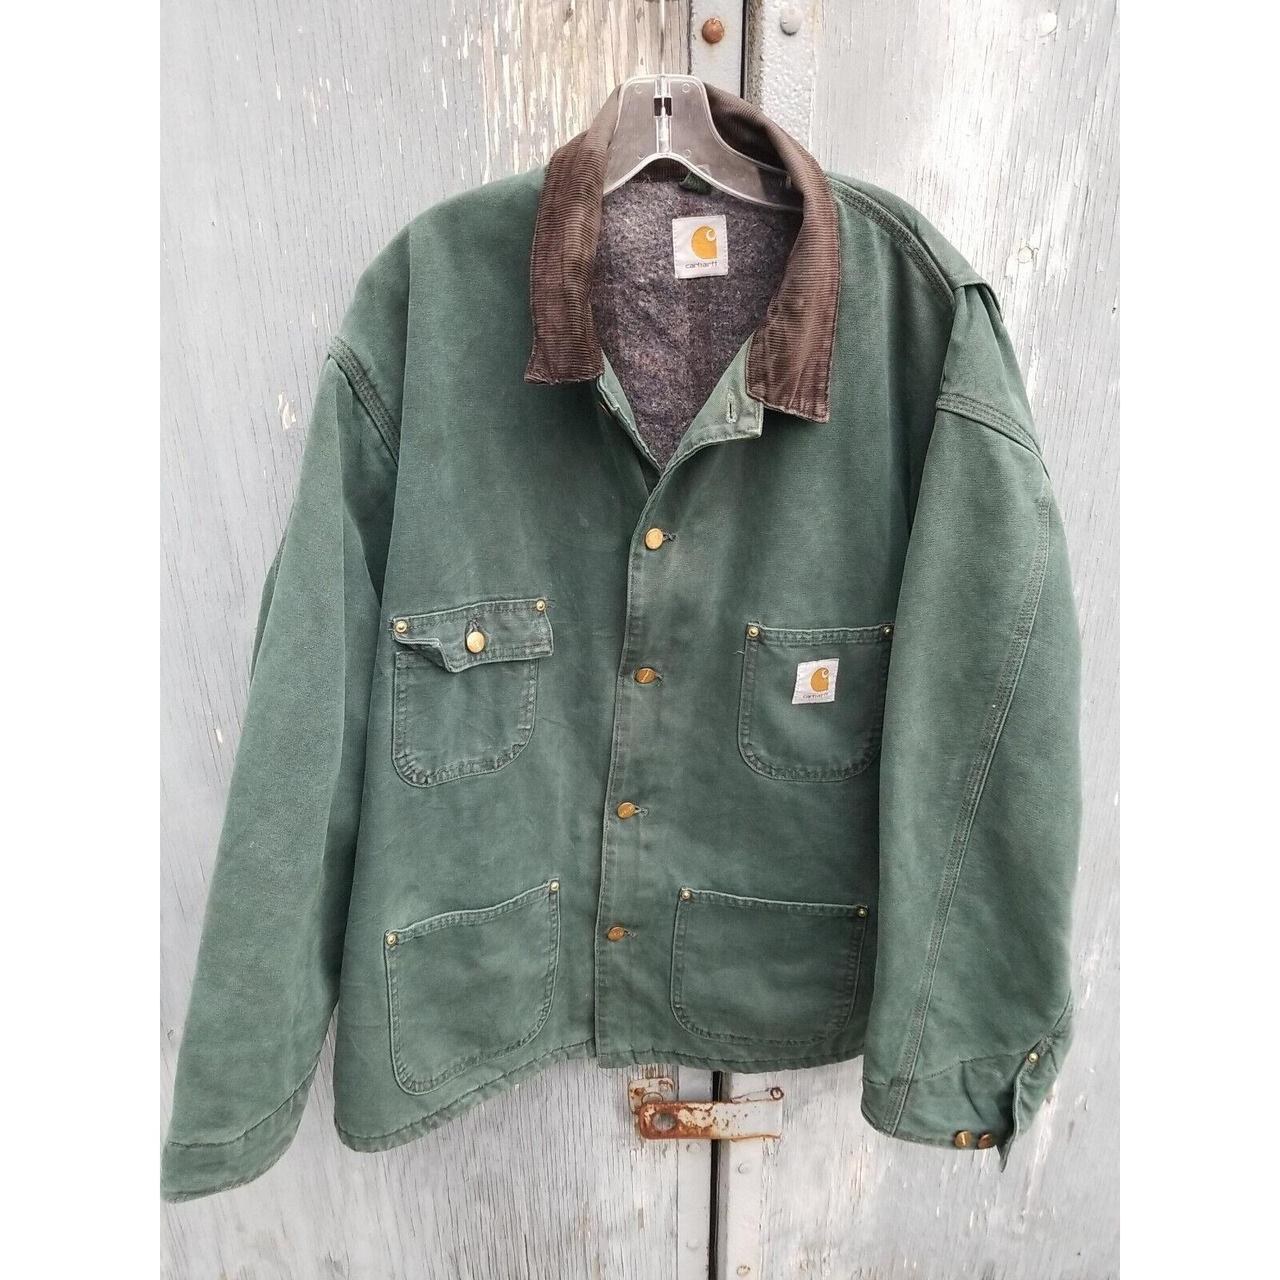 Vtg Carhartt Mens Chore Coat Green Lined Work Jacket... - Depop